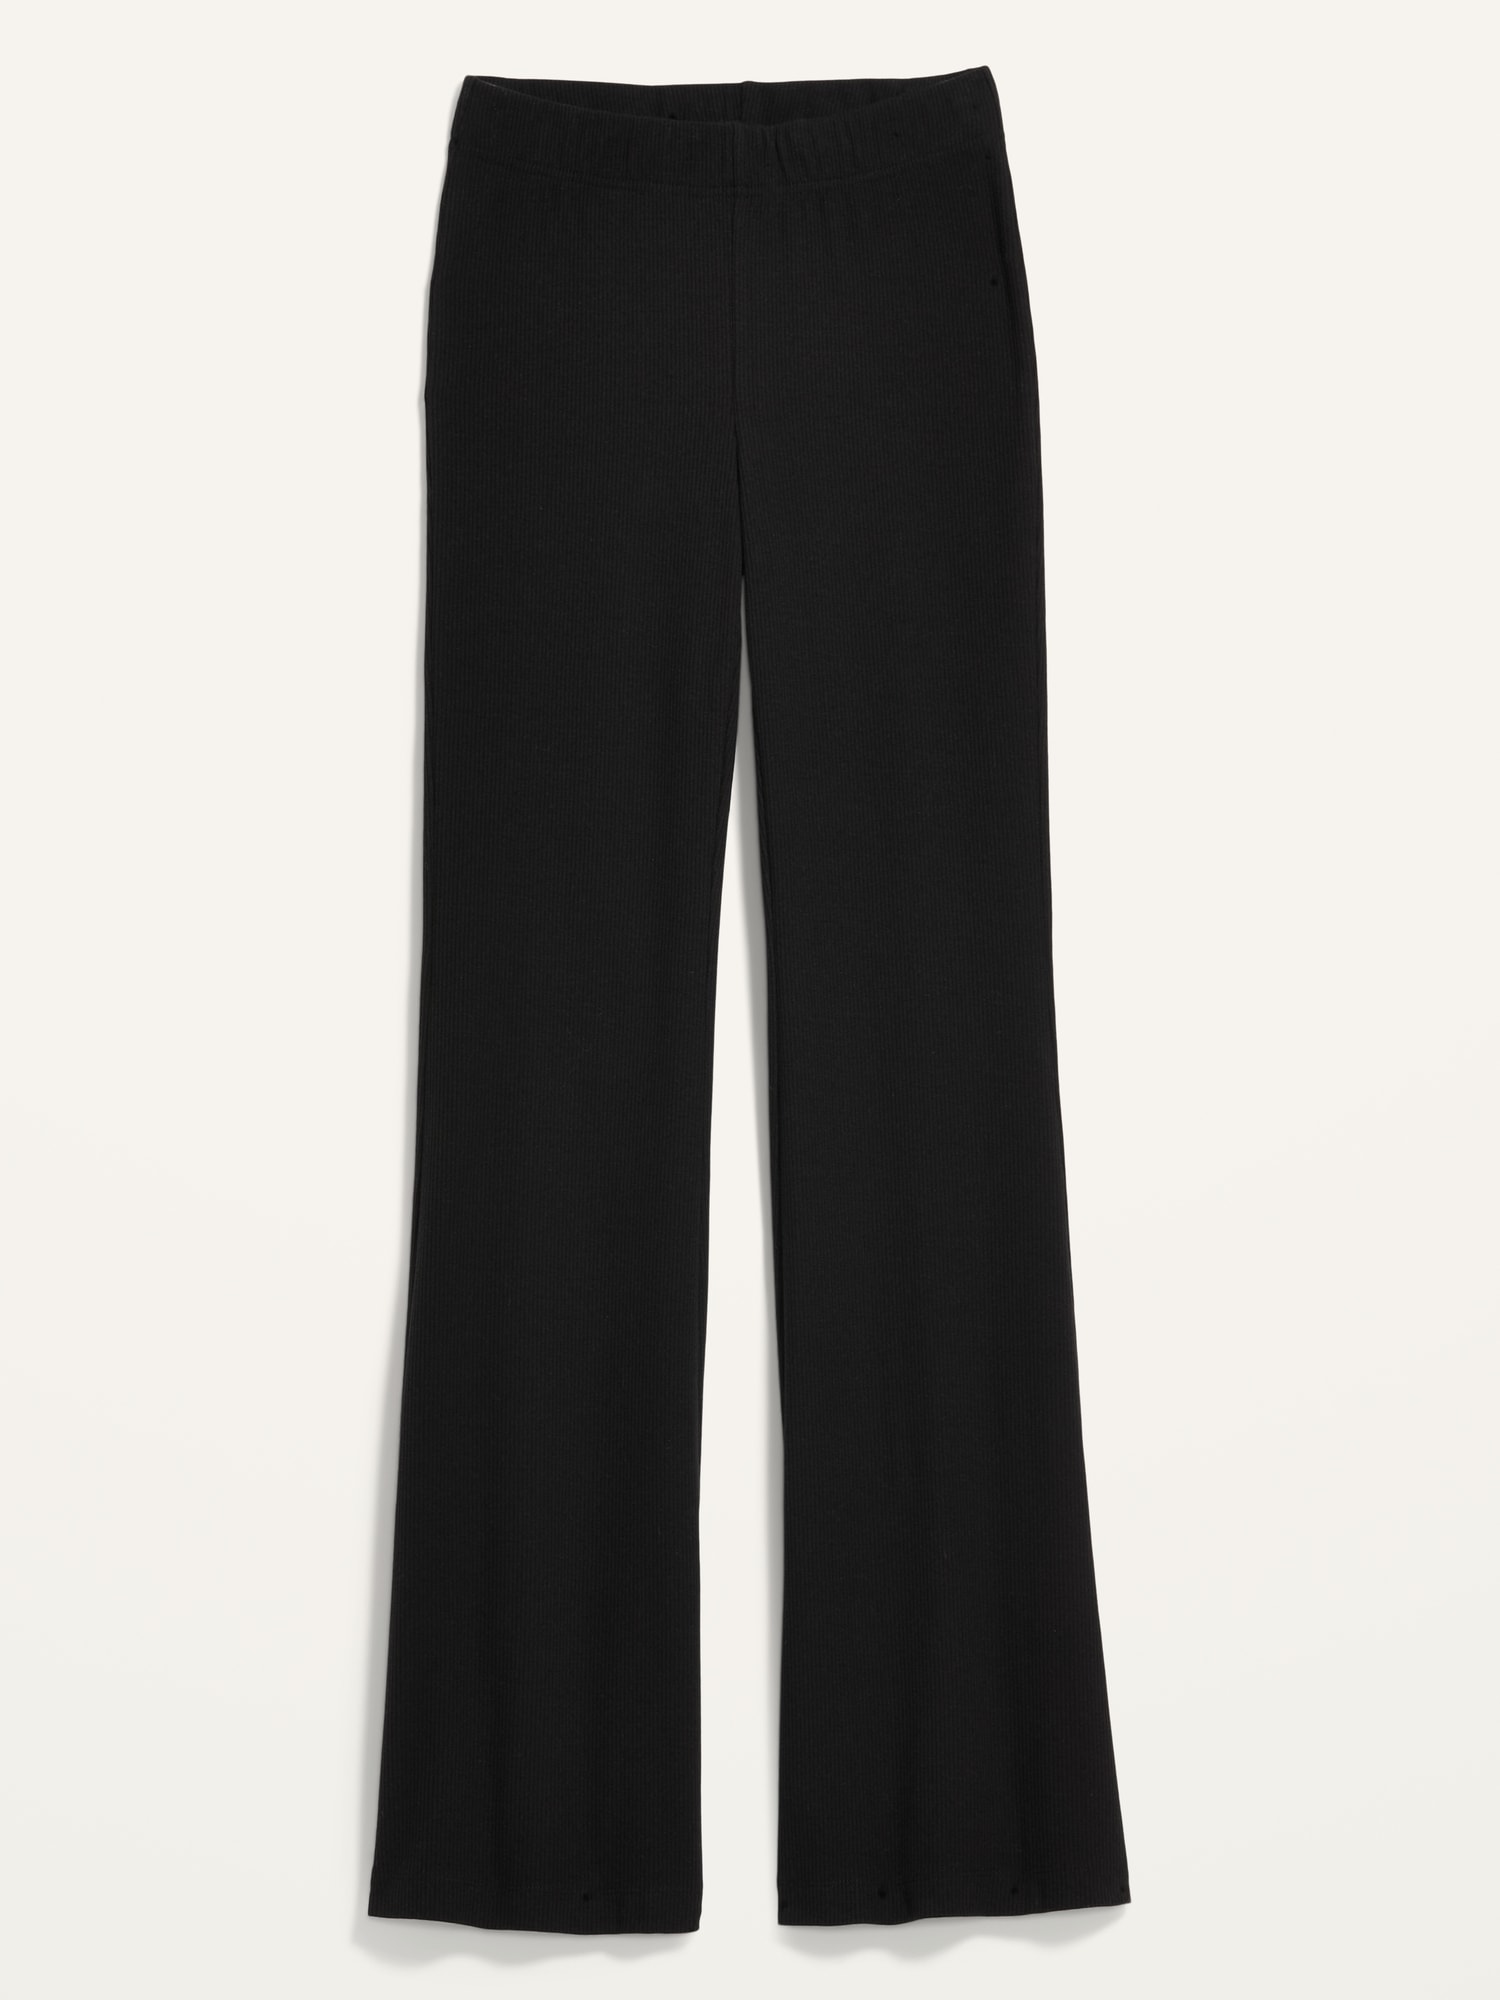 H&M women's black flare leg pants / leggings. Size small